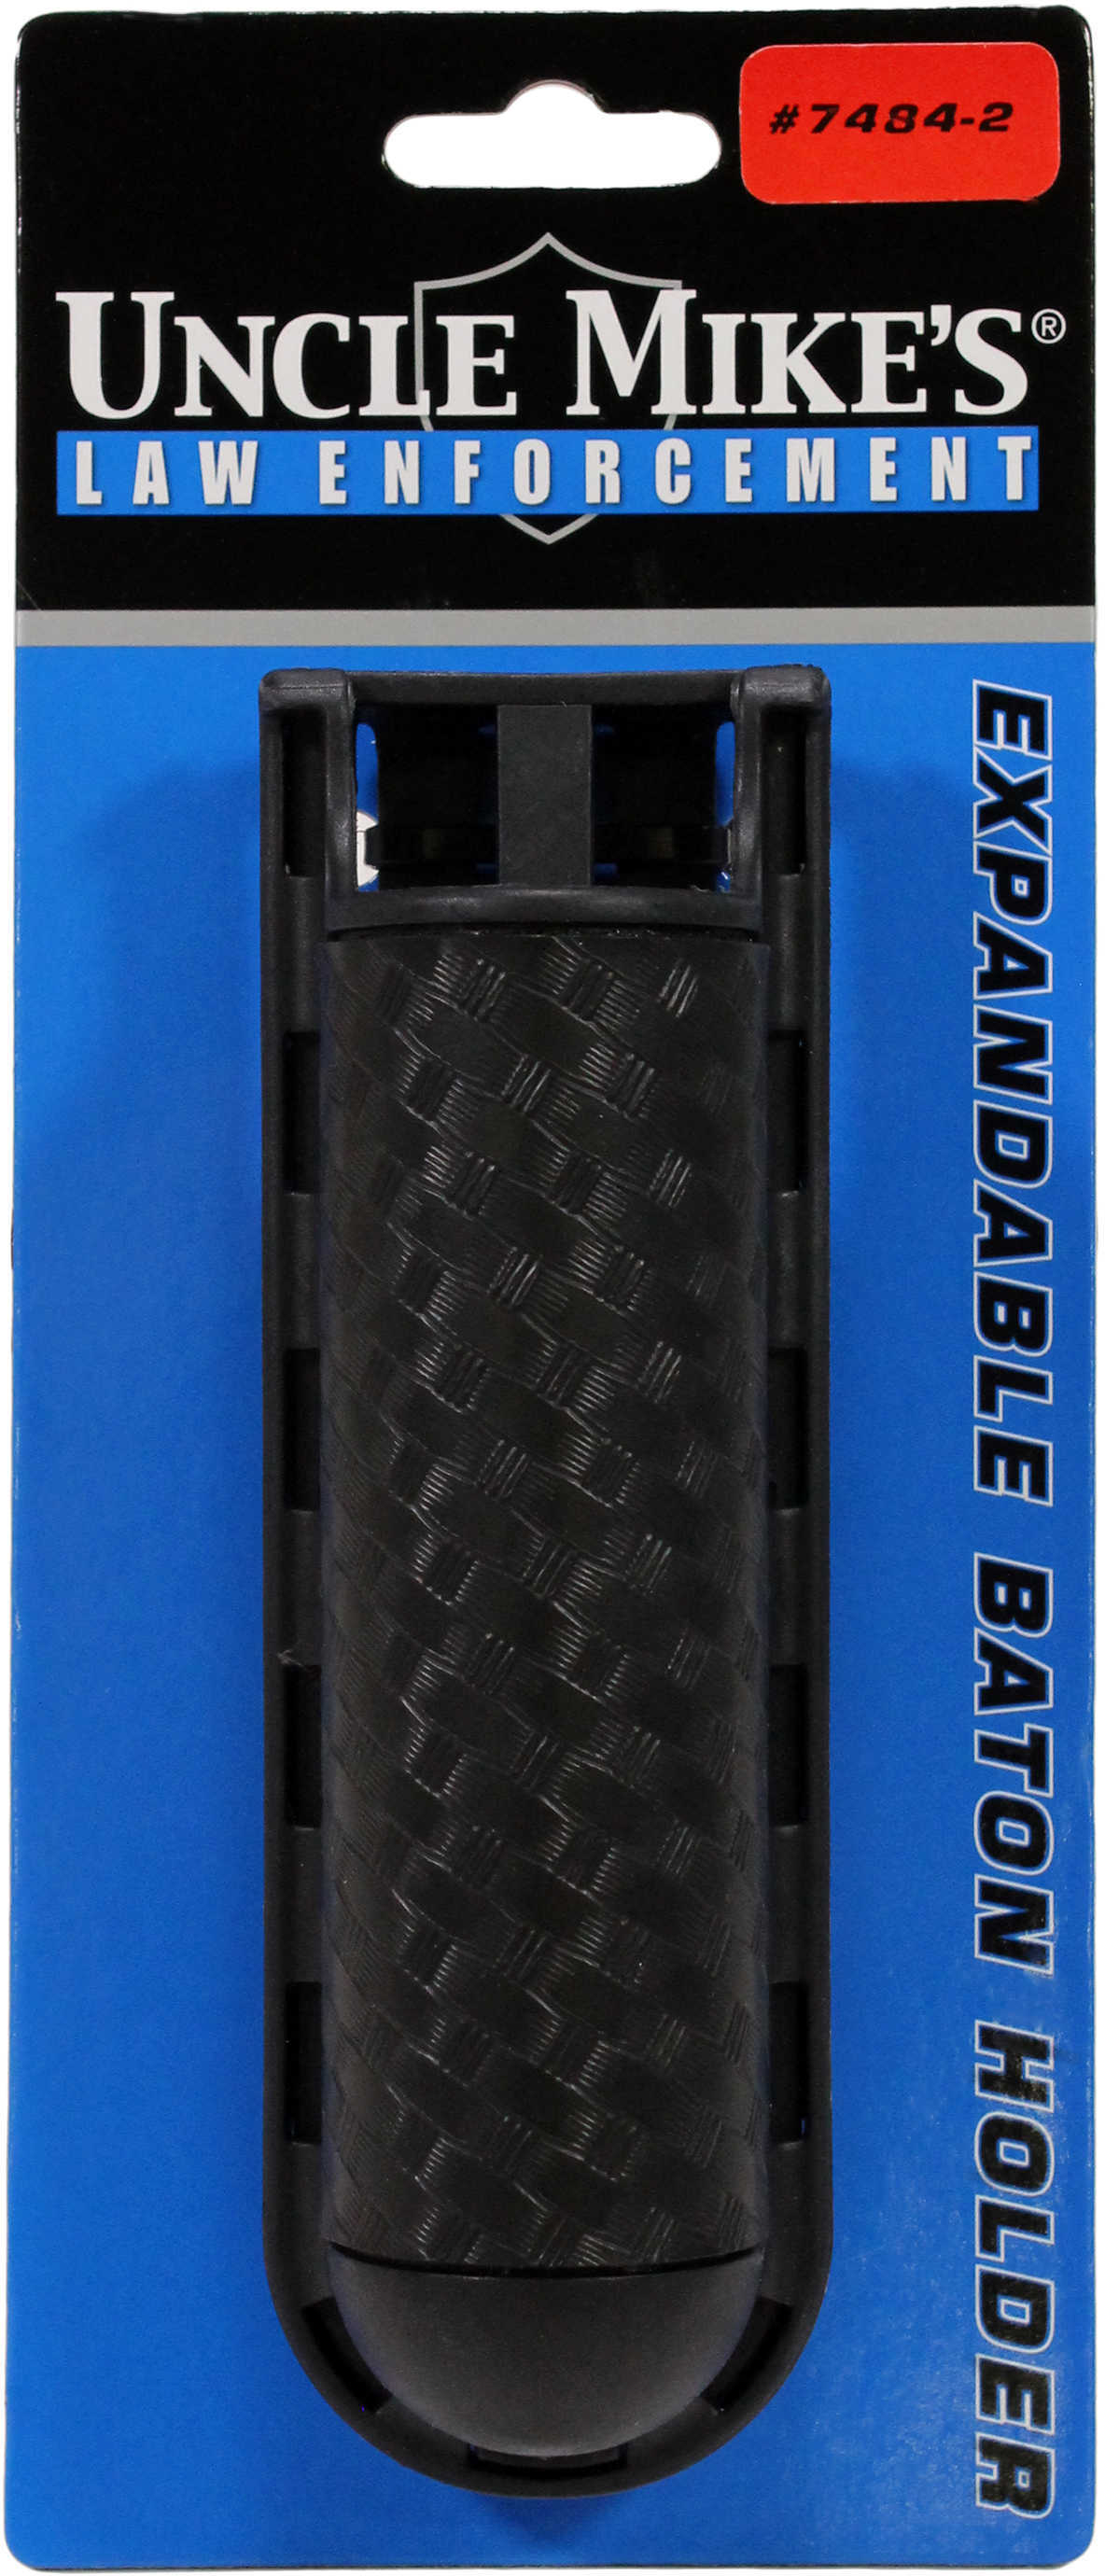 Expandable Baton Holders Mirage Basketweave Black Md: 74842